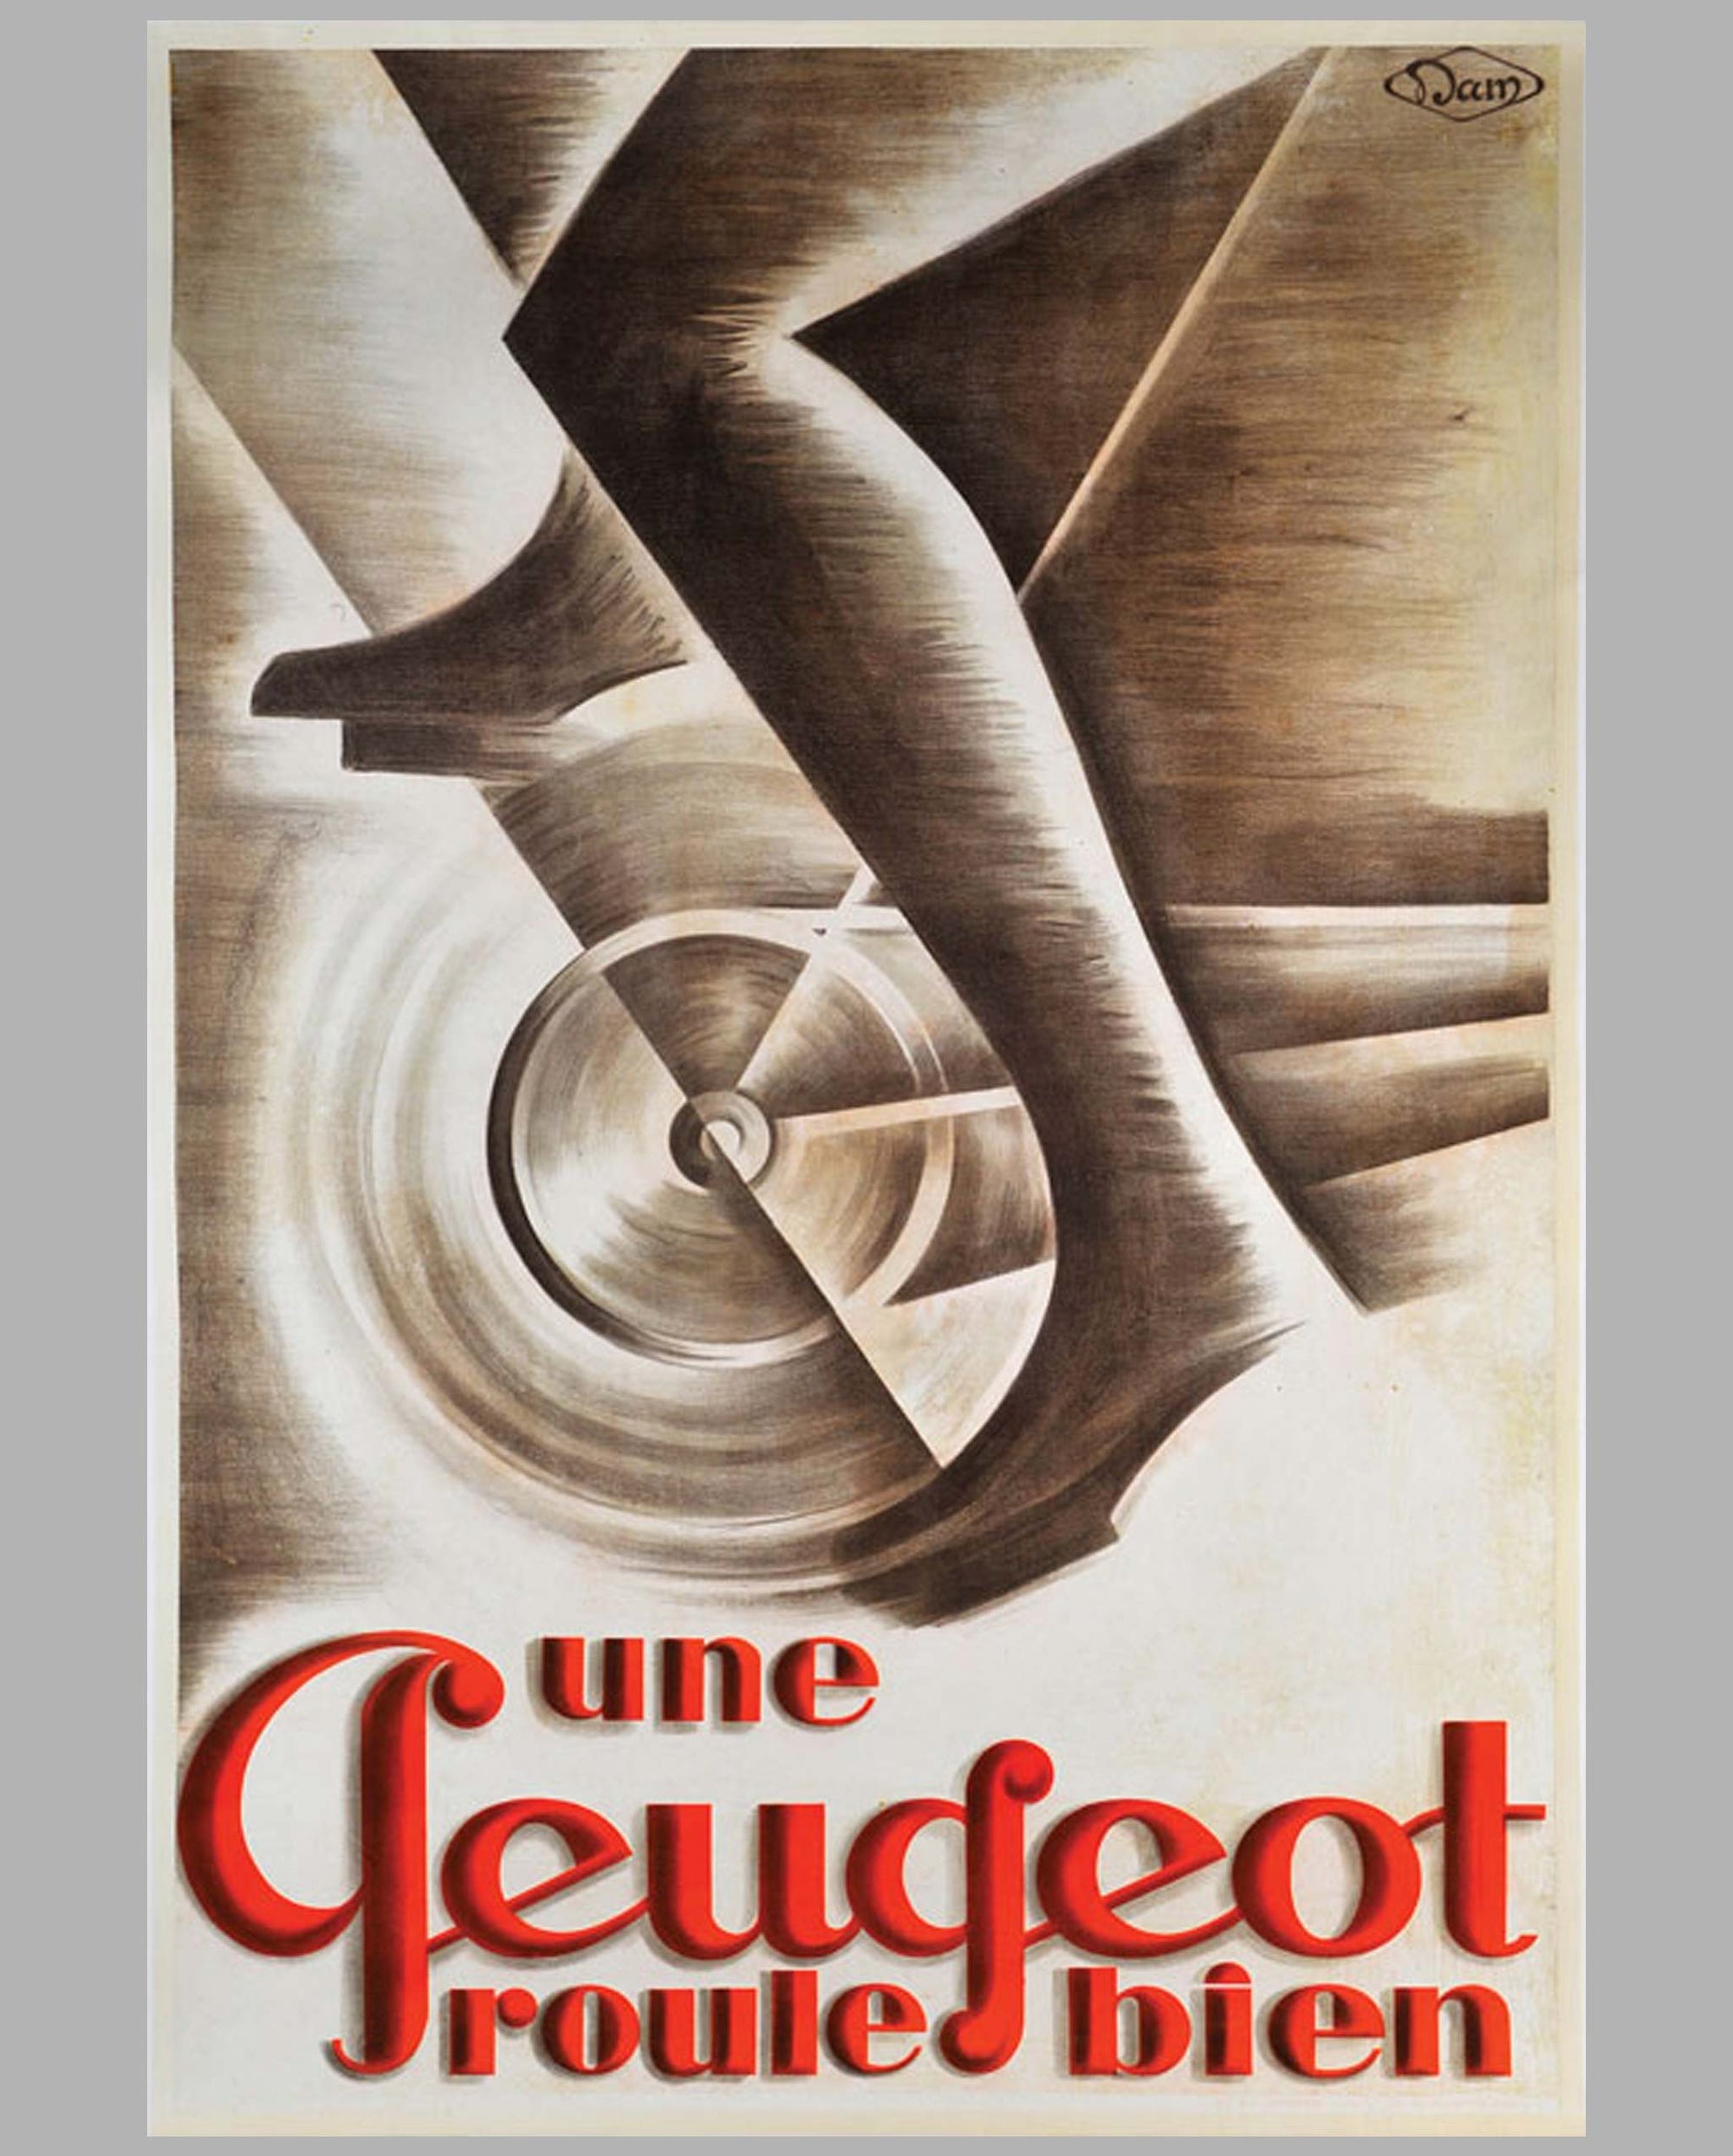 Peugeot Bicycle large original advertising poster by Dam